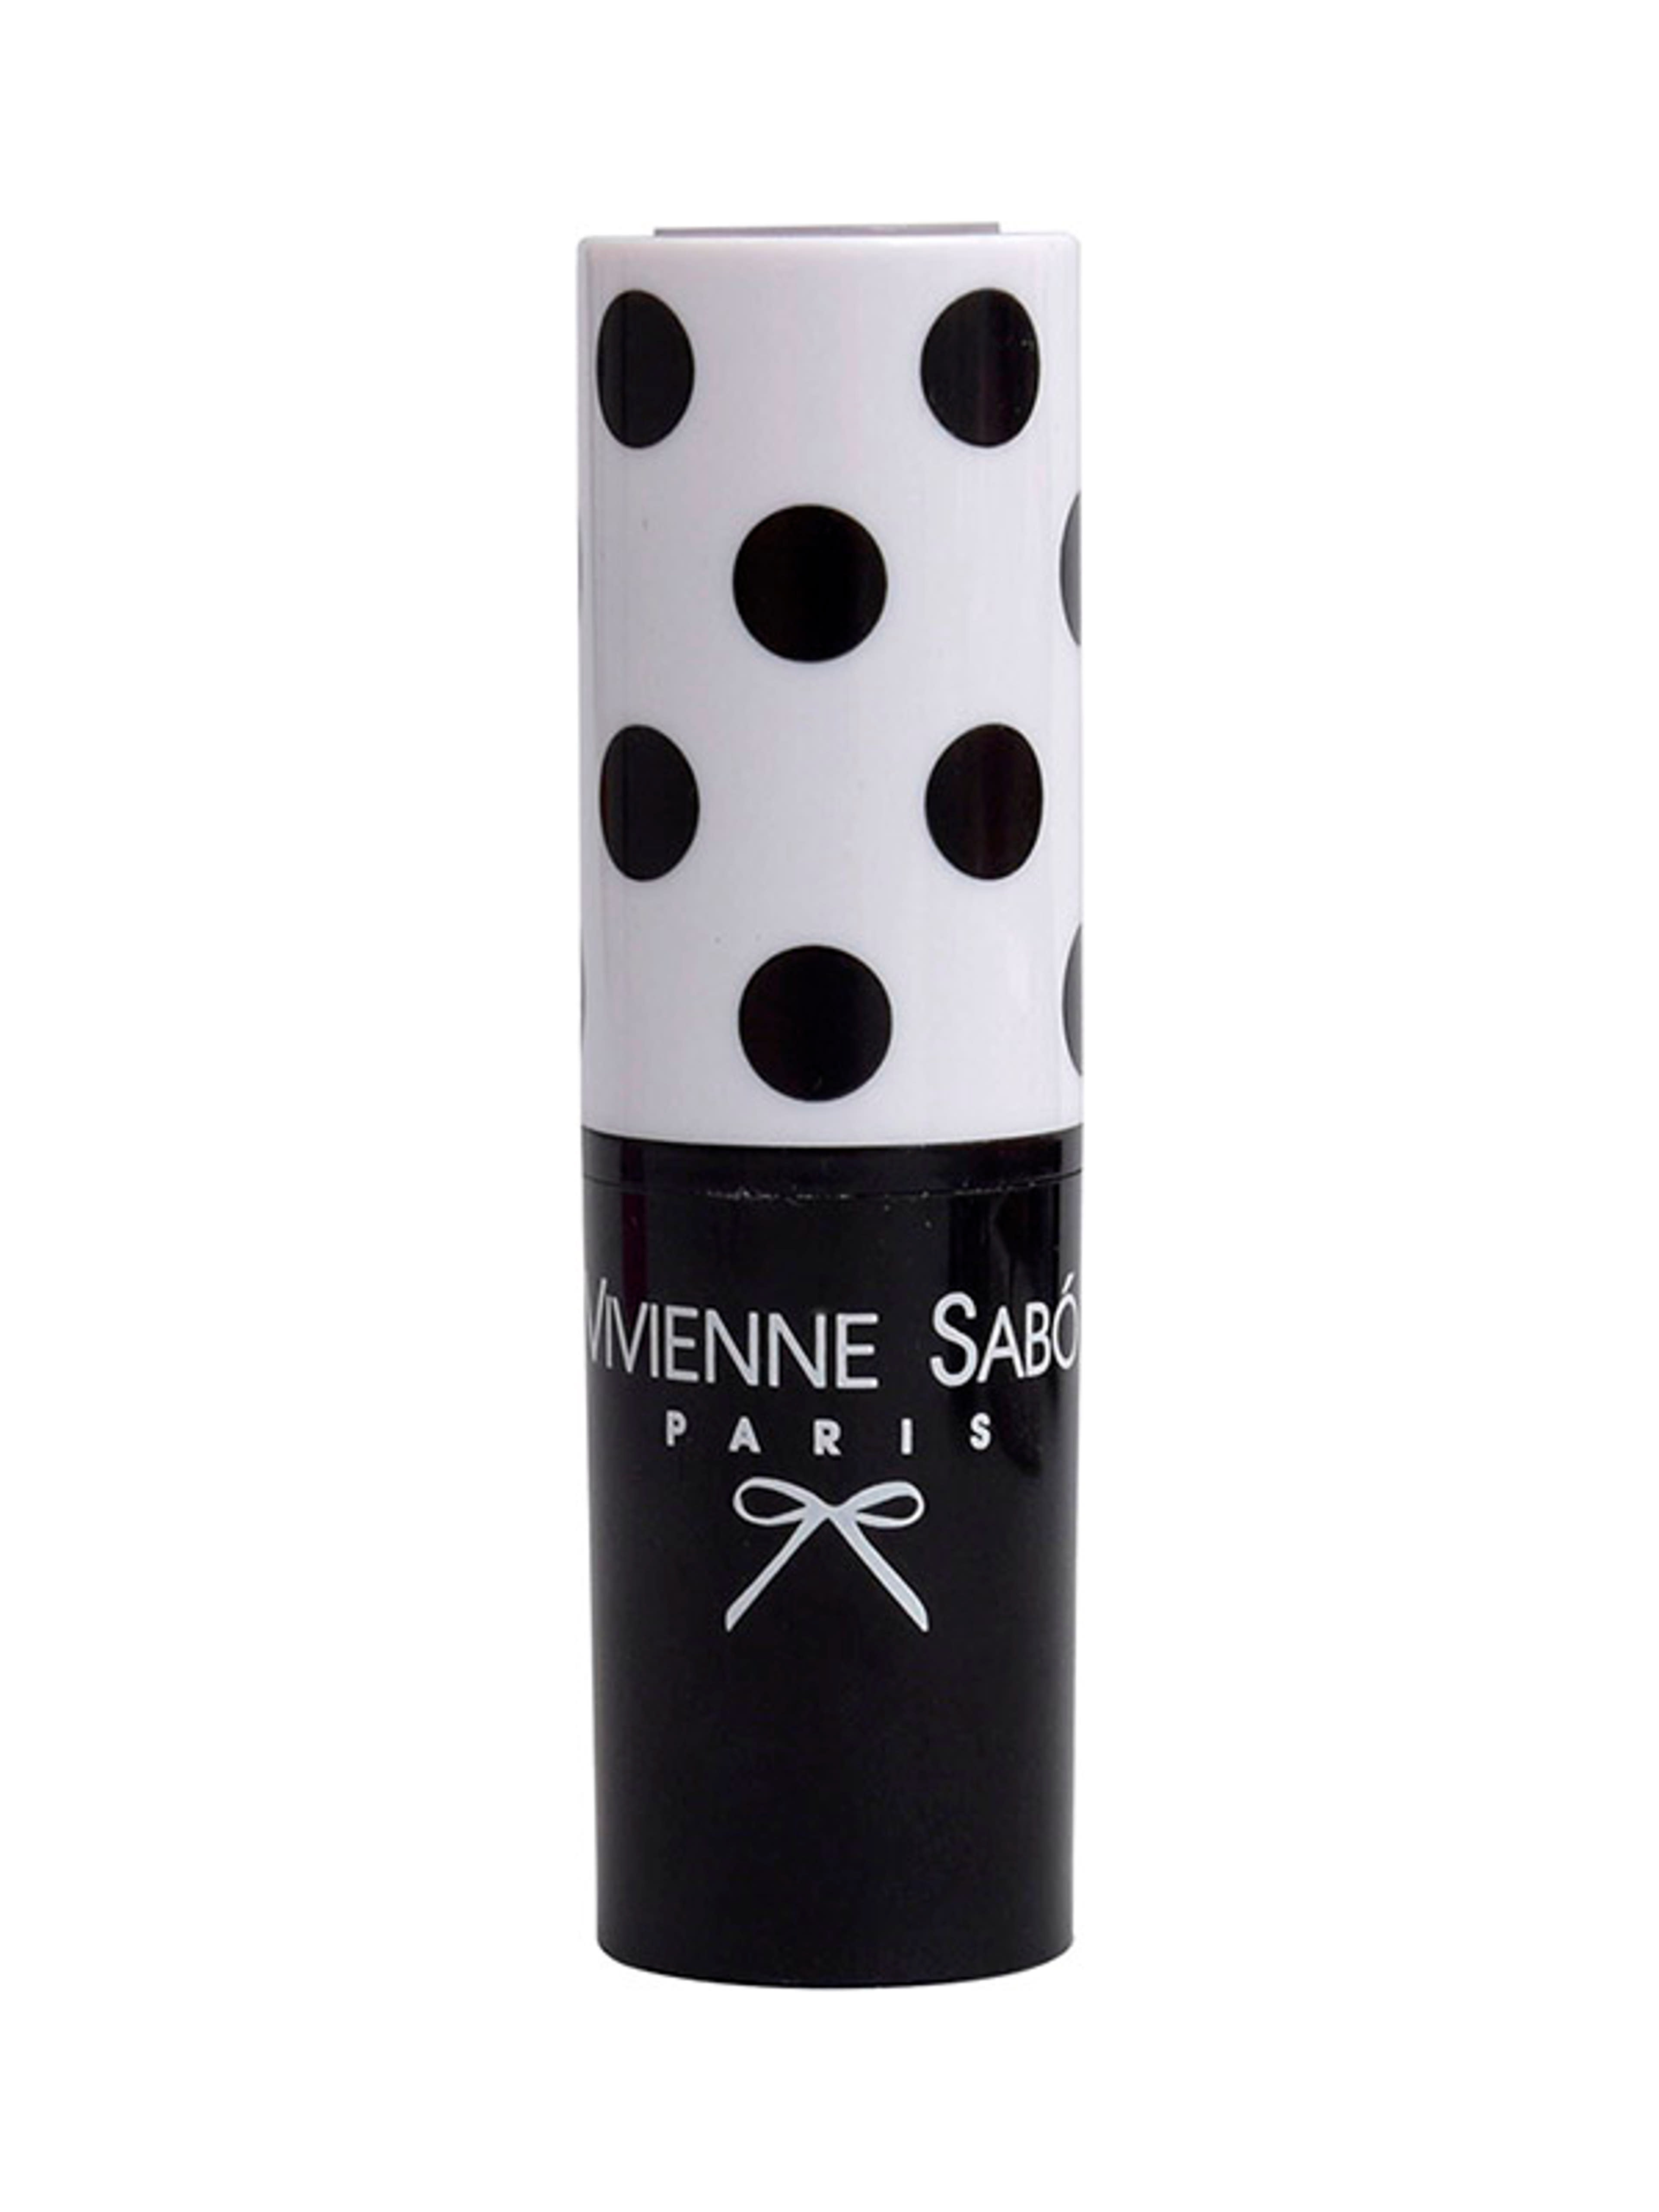 Vivienne Sabo rúzs merci 05 - 1 db-1